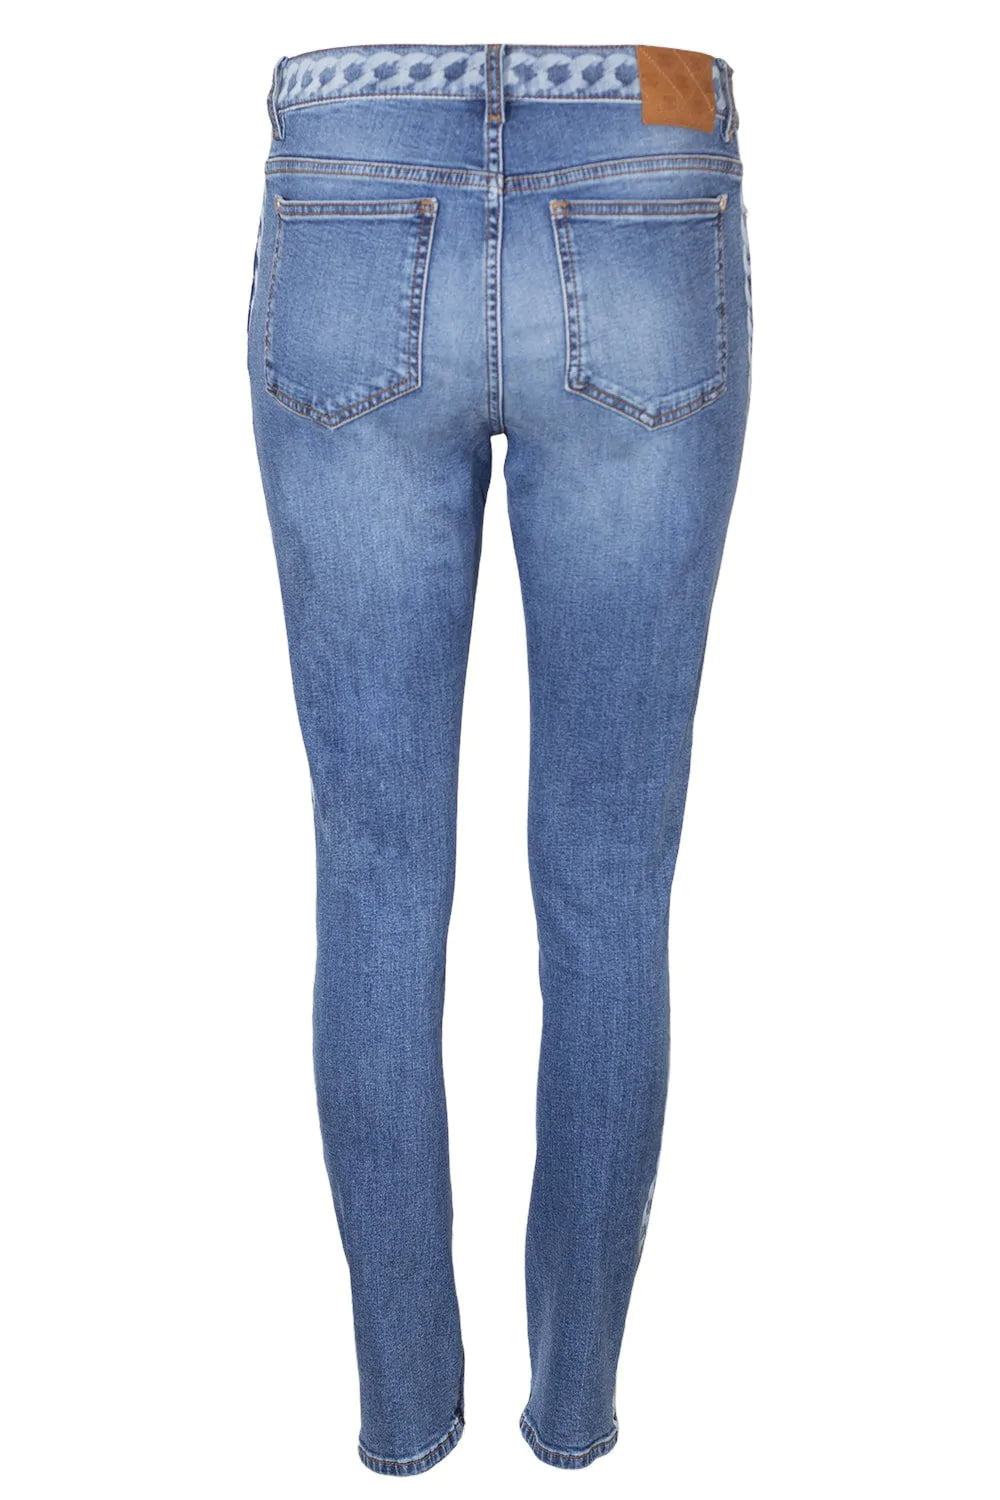 chanel clothingpantslim fit denim 40 chain link print skinny jeans 42308730257560